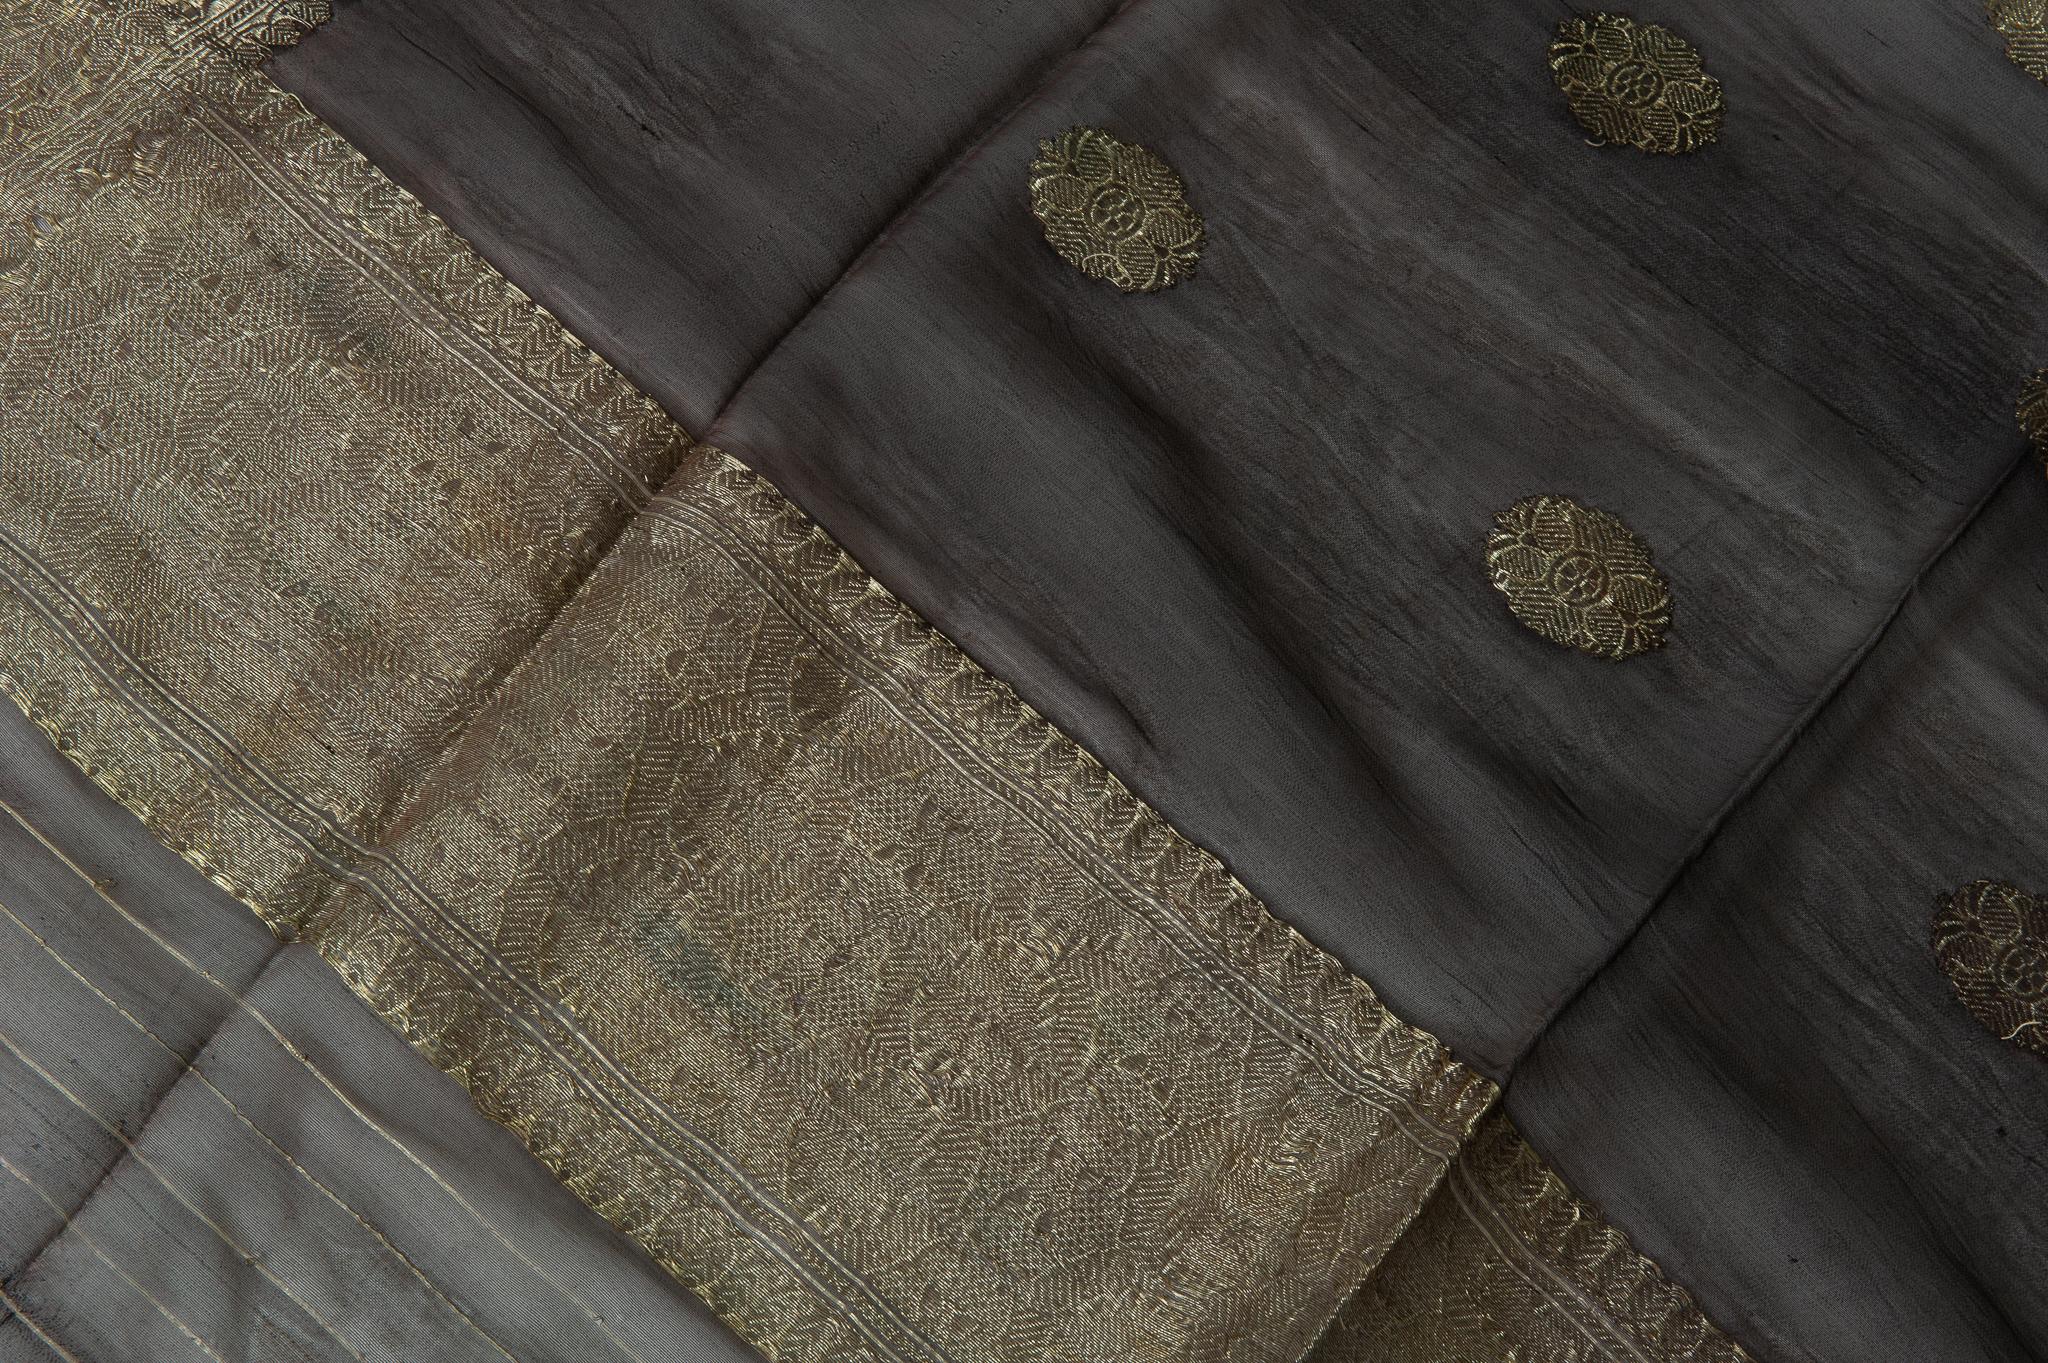 Vintage Indian Sari Dark Brown Color, Unusual Curtains or an Evening Dress 2